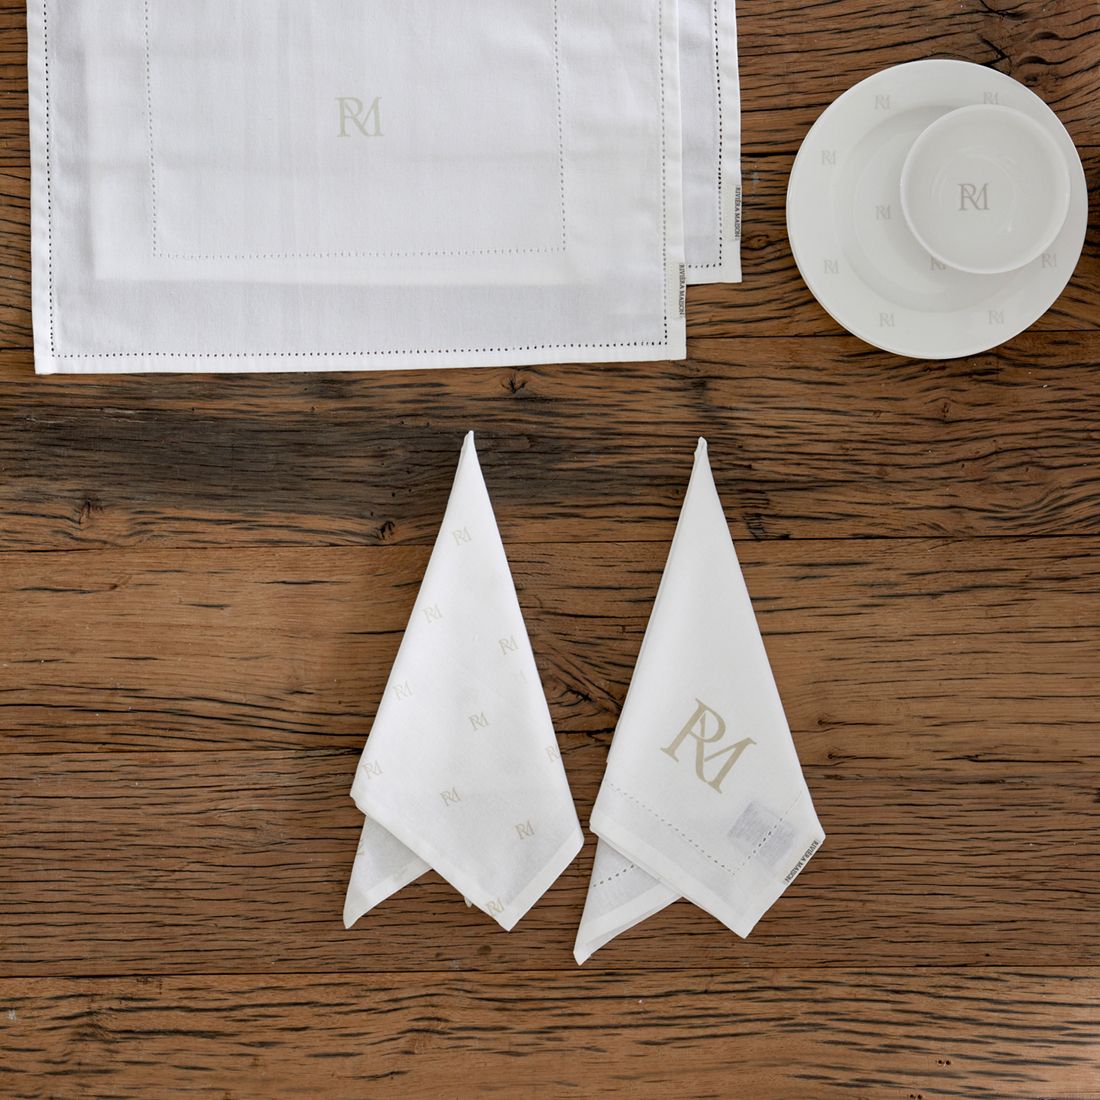 Riviera Maison Serviett stoff servietter 2pk RM Monogram Napkin 2 pieces